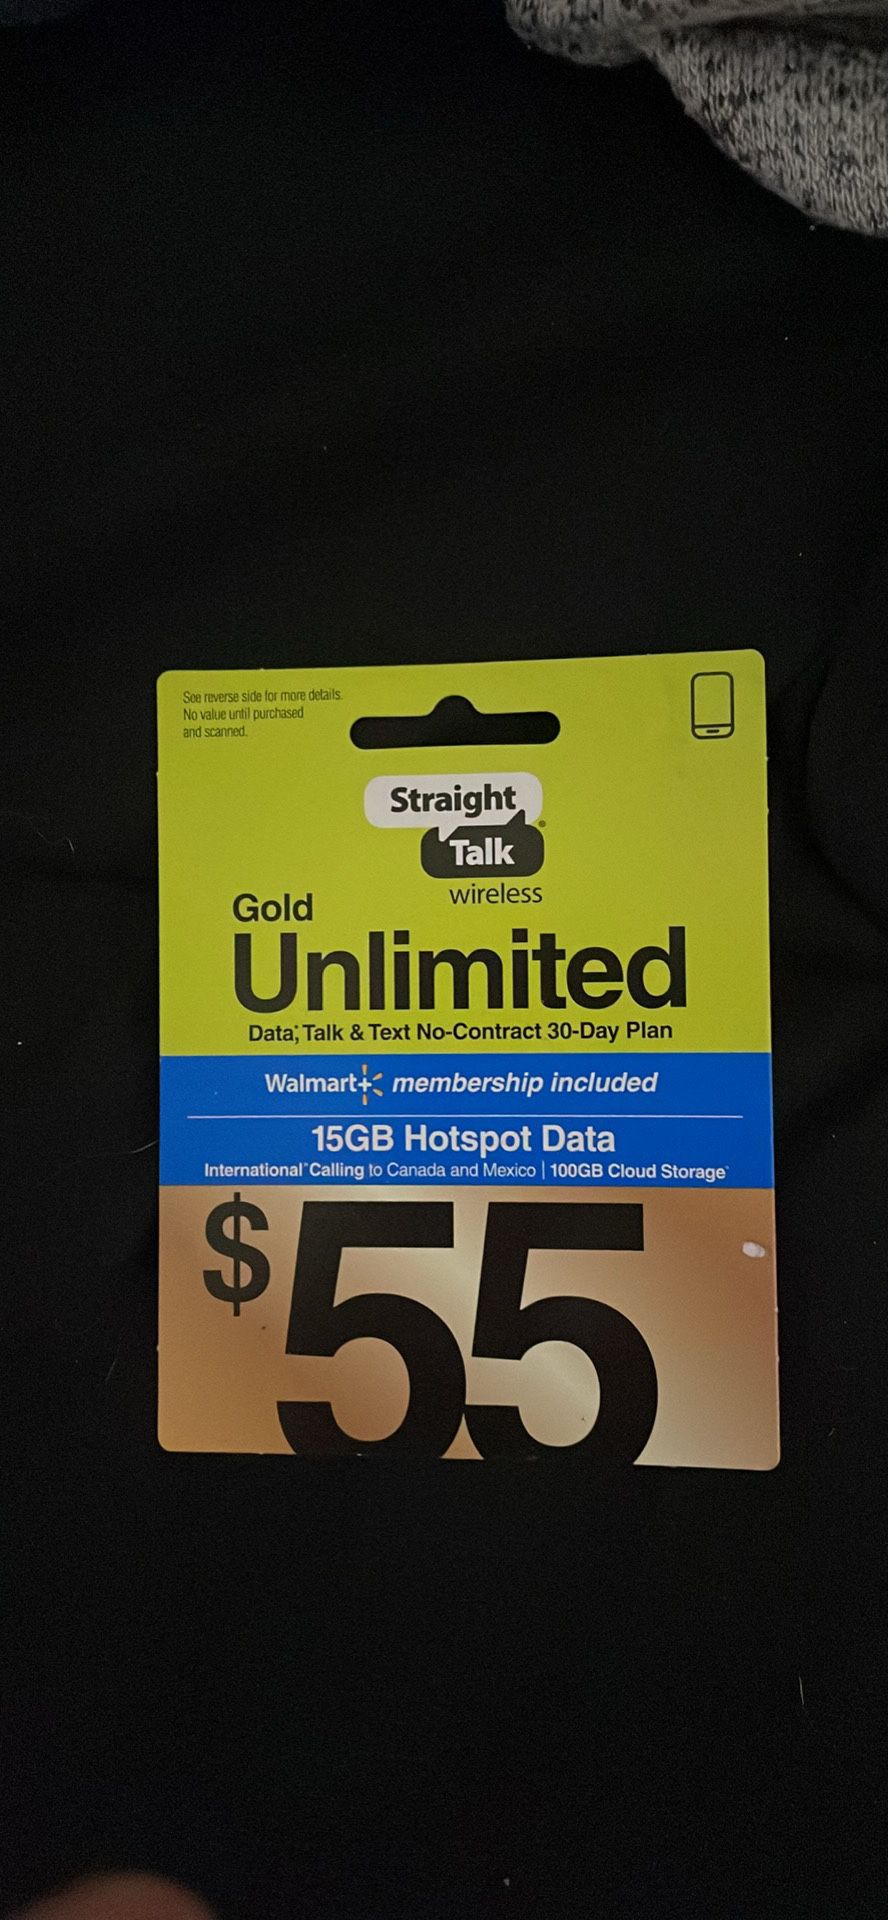 Straight Talk Gold Unlimited $55